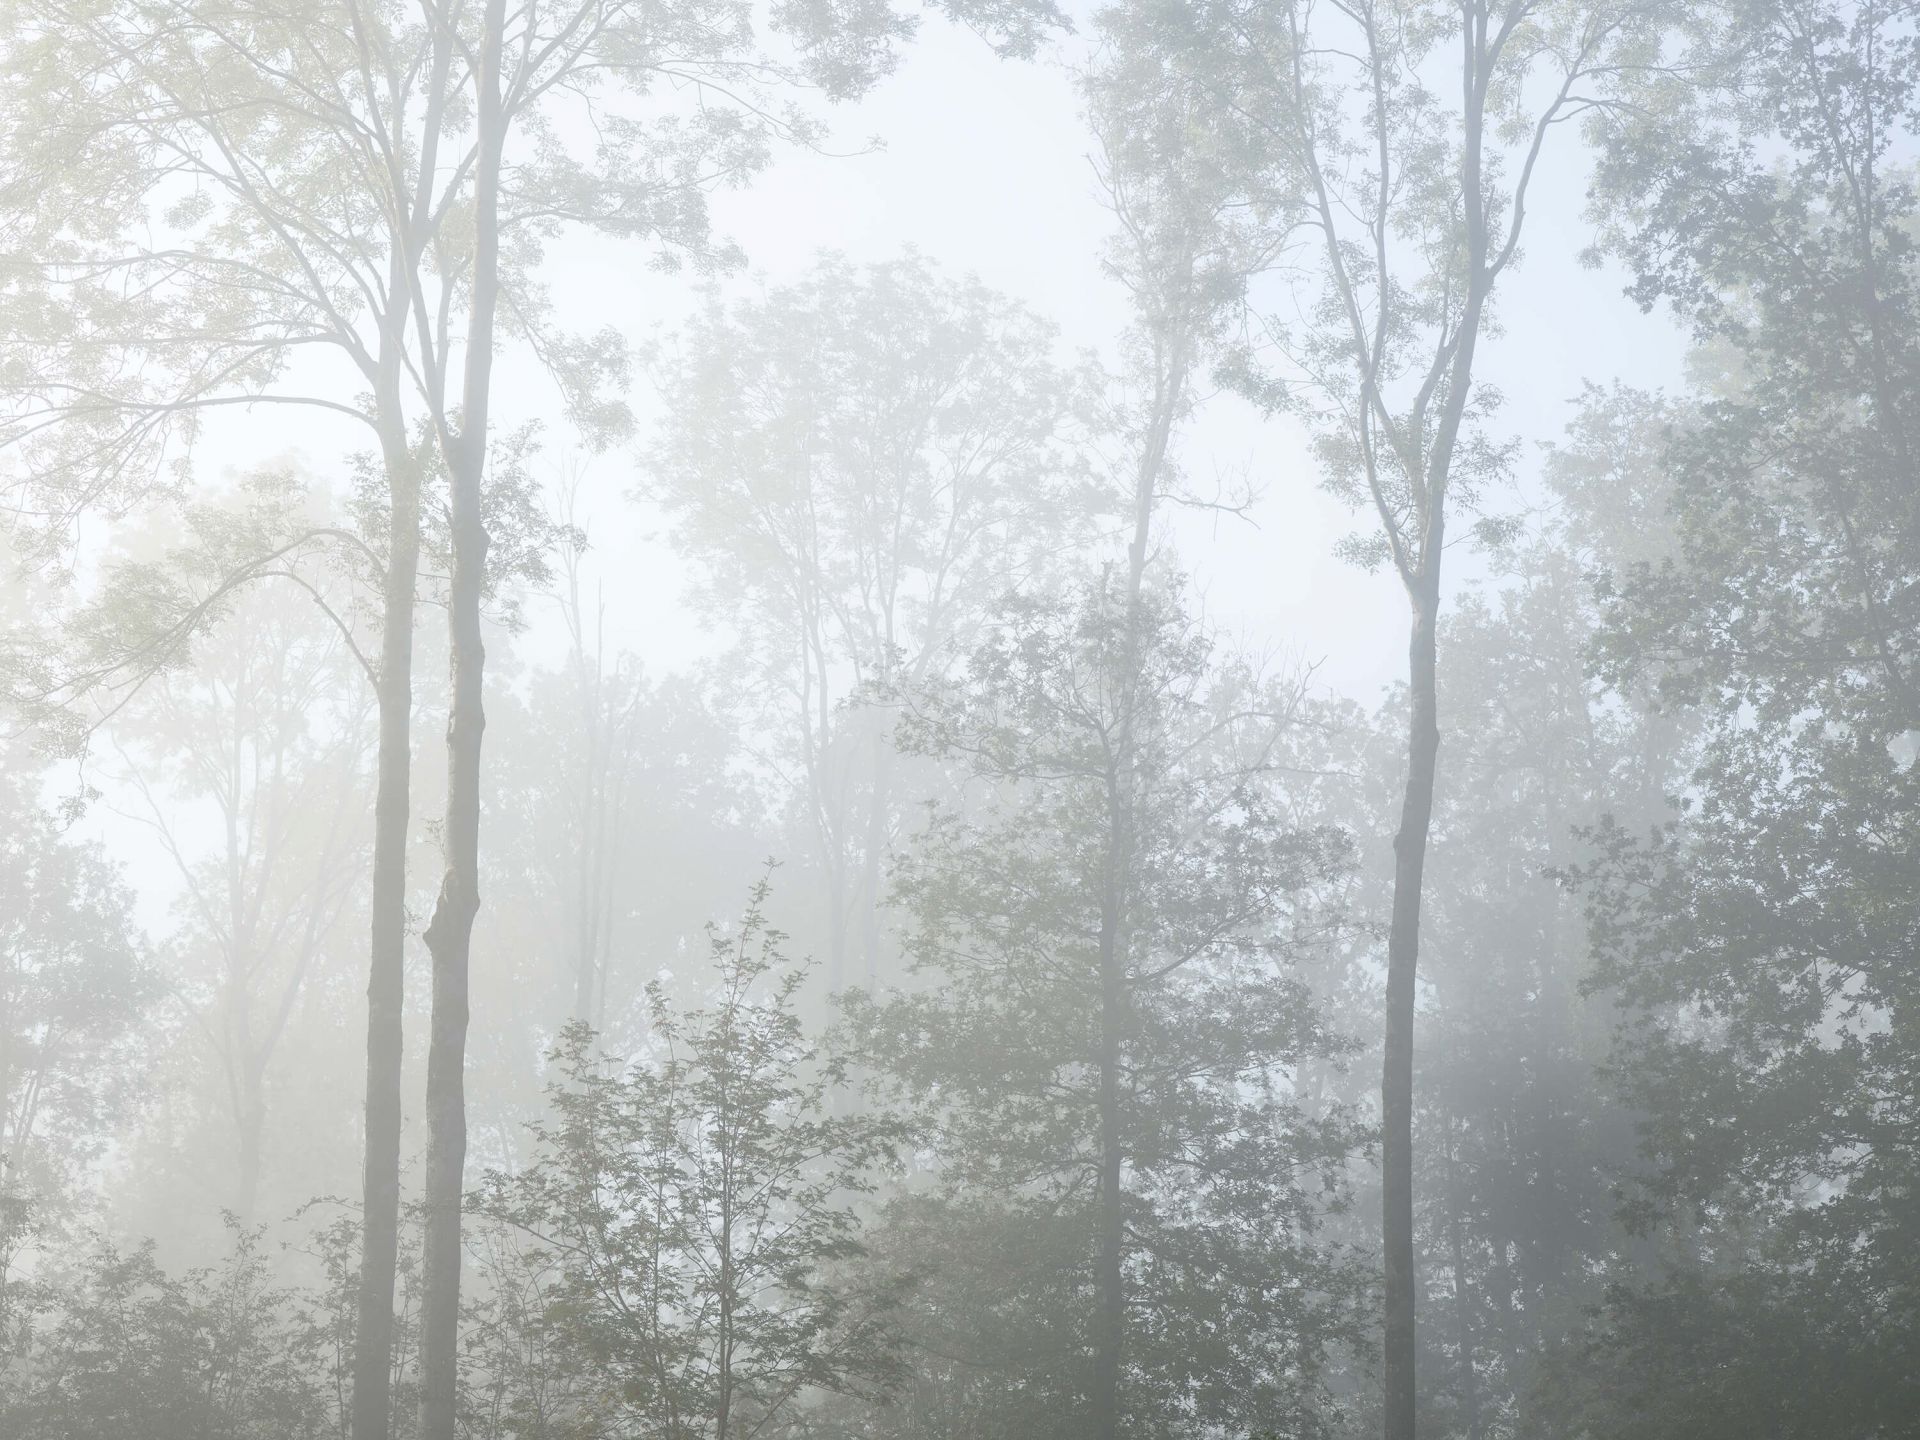 wanhoop alledaags Kruiden Dichte mist in het bos - Fotobehang